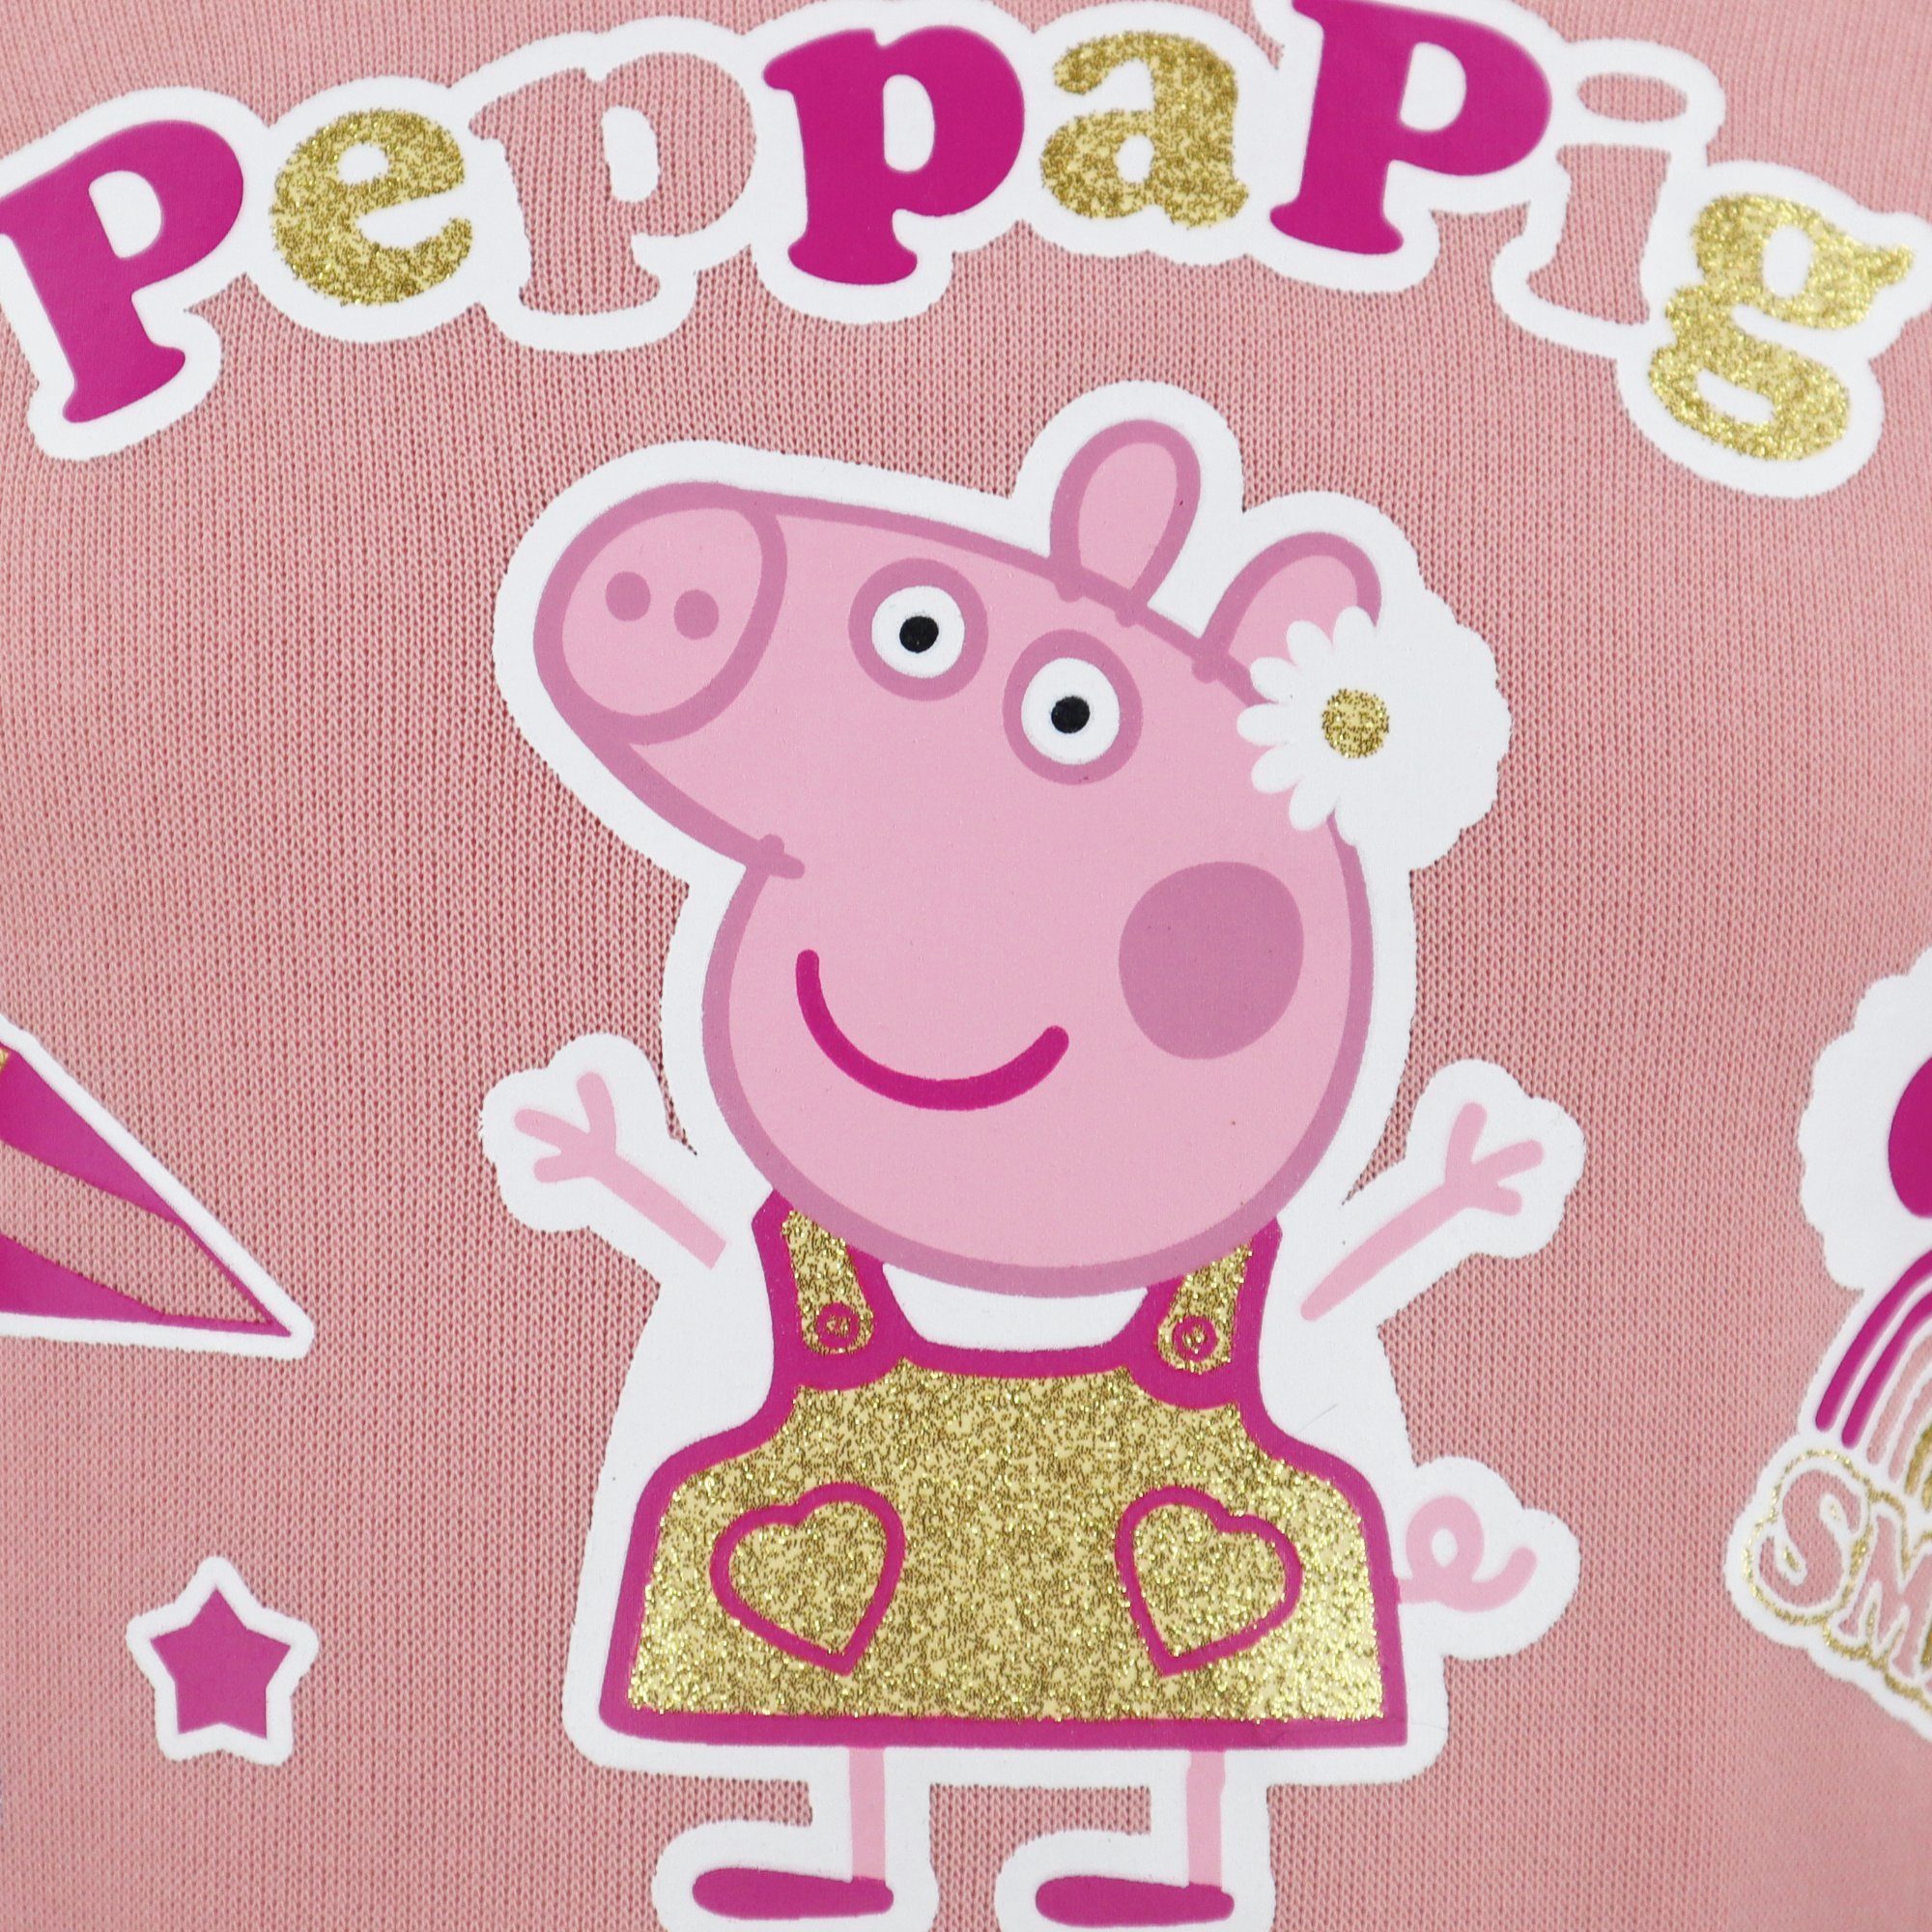 Peppa Pig Kapuzenpullover Peppa Kapuzenpullover Rosa bis 116 Pulli Mädchen Lila Kinder Gr. 98 Wutz Pig in